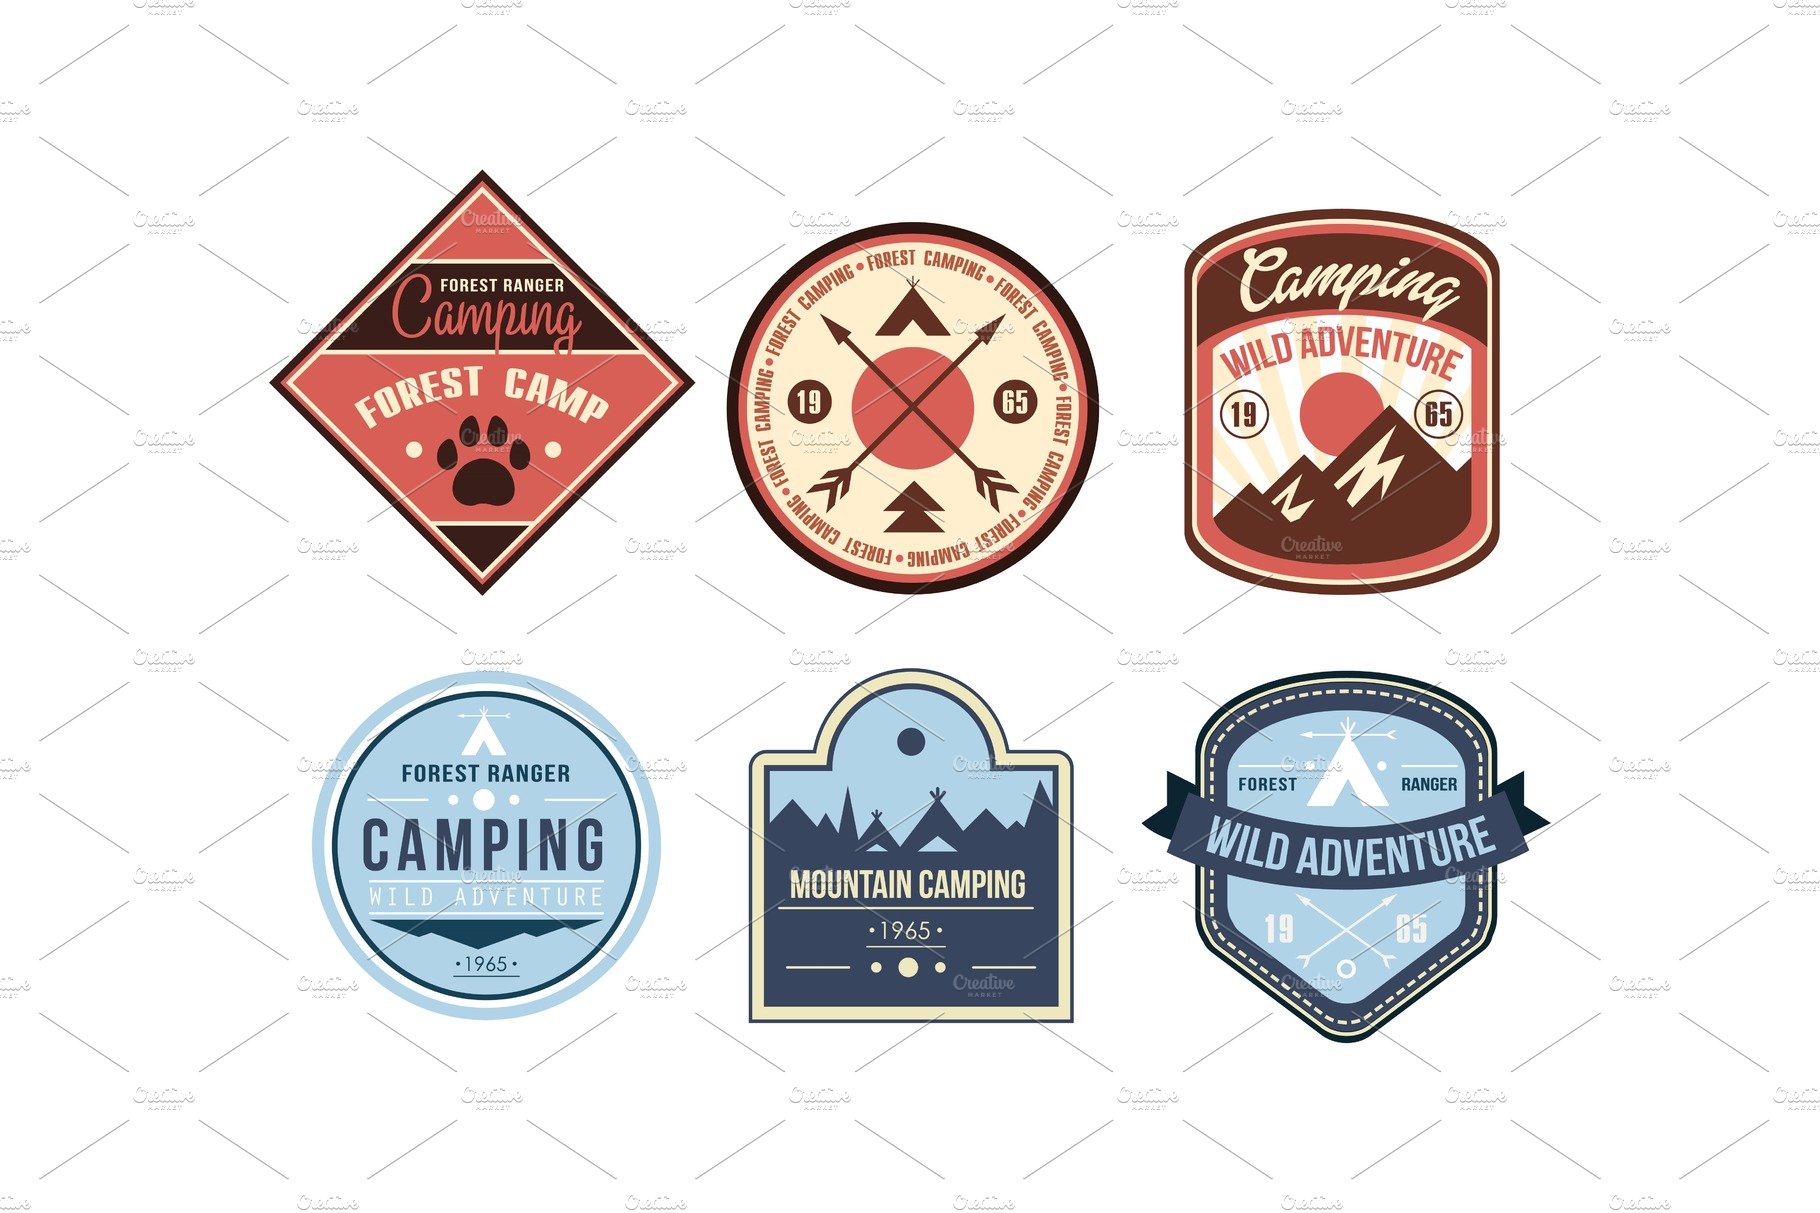 Mountain camping retro logo badges cover image.